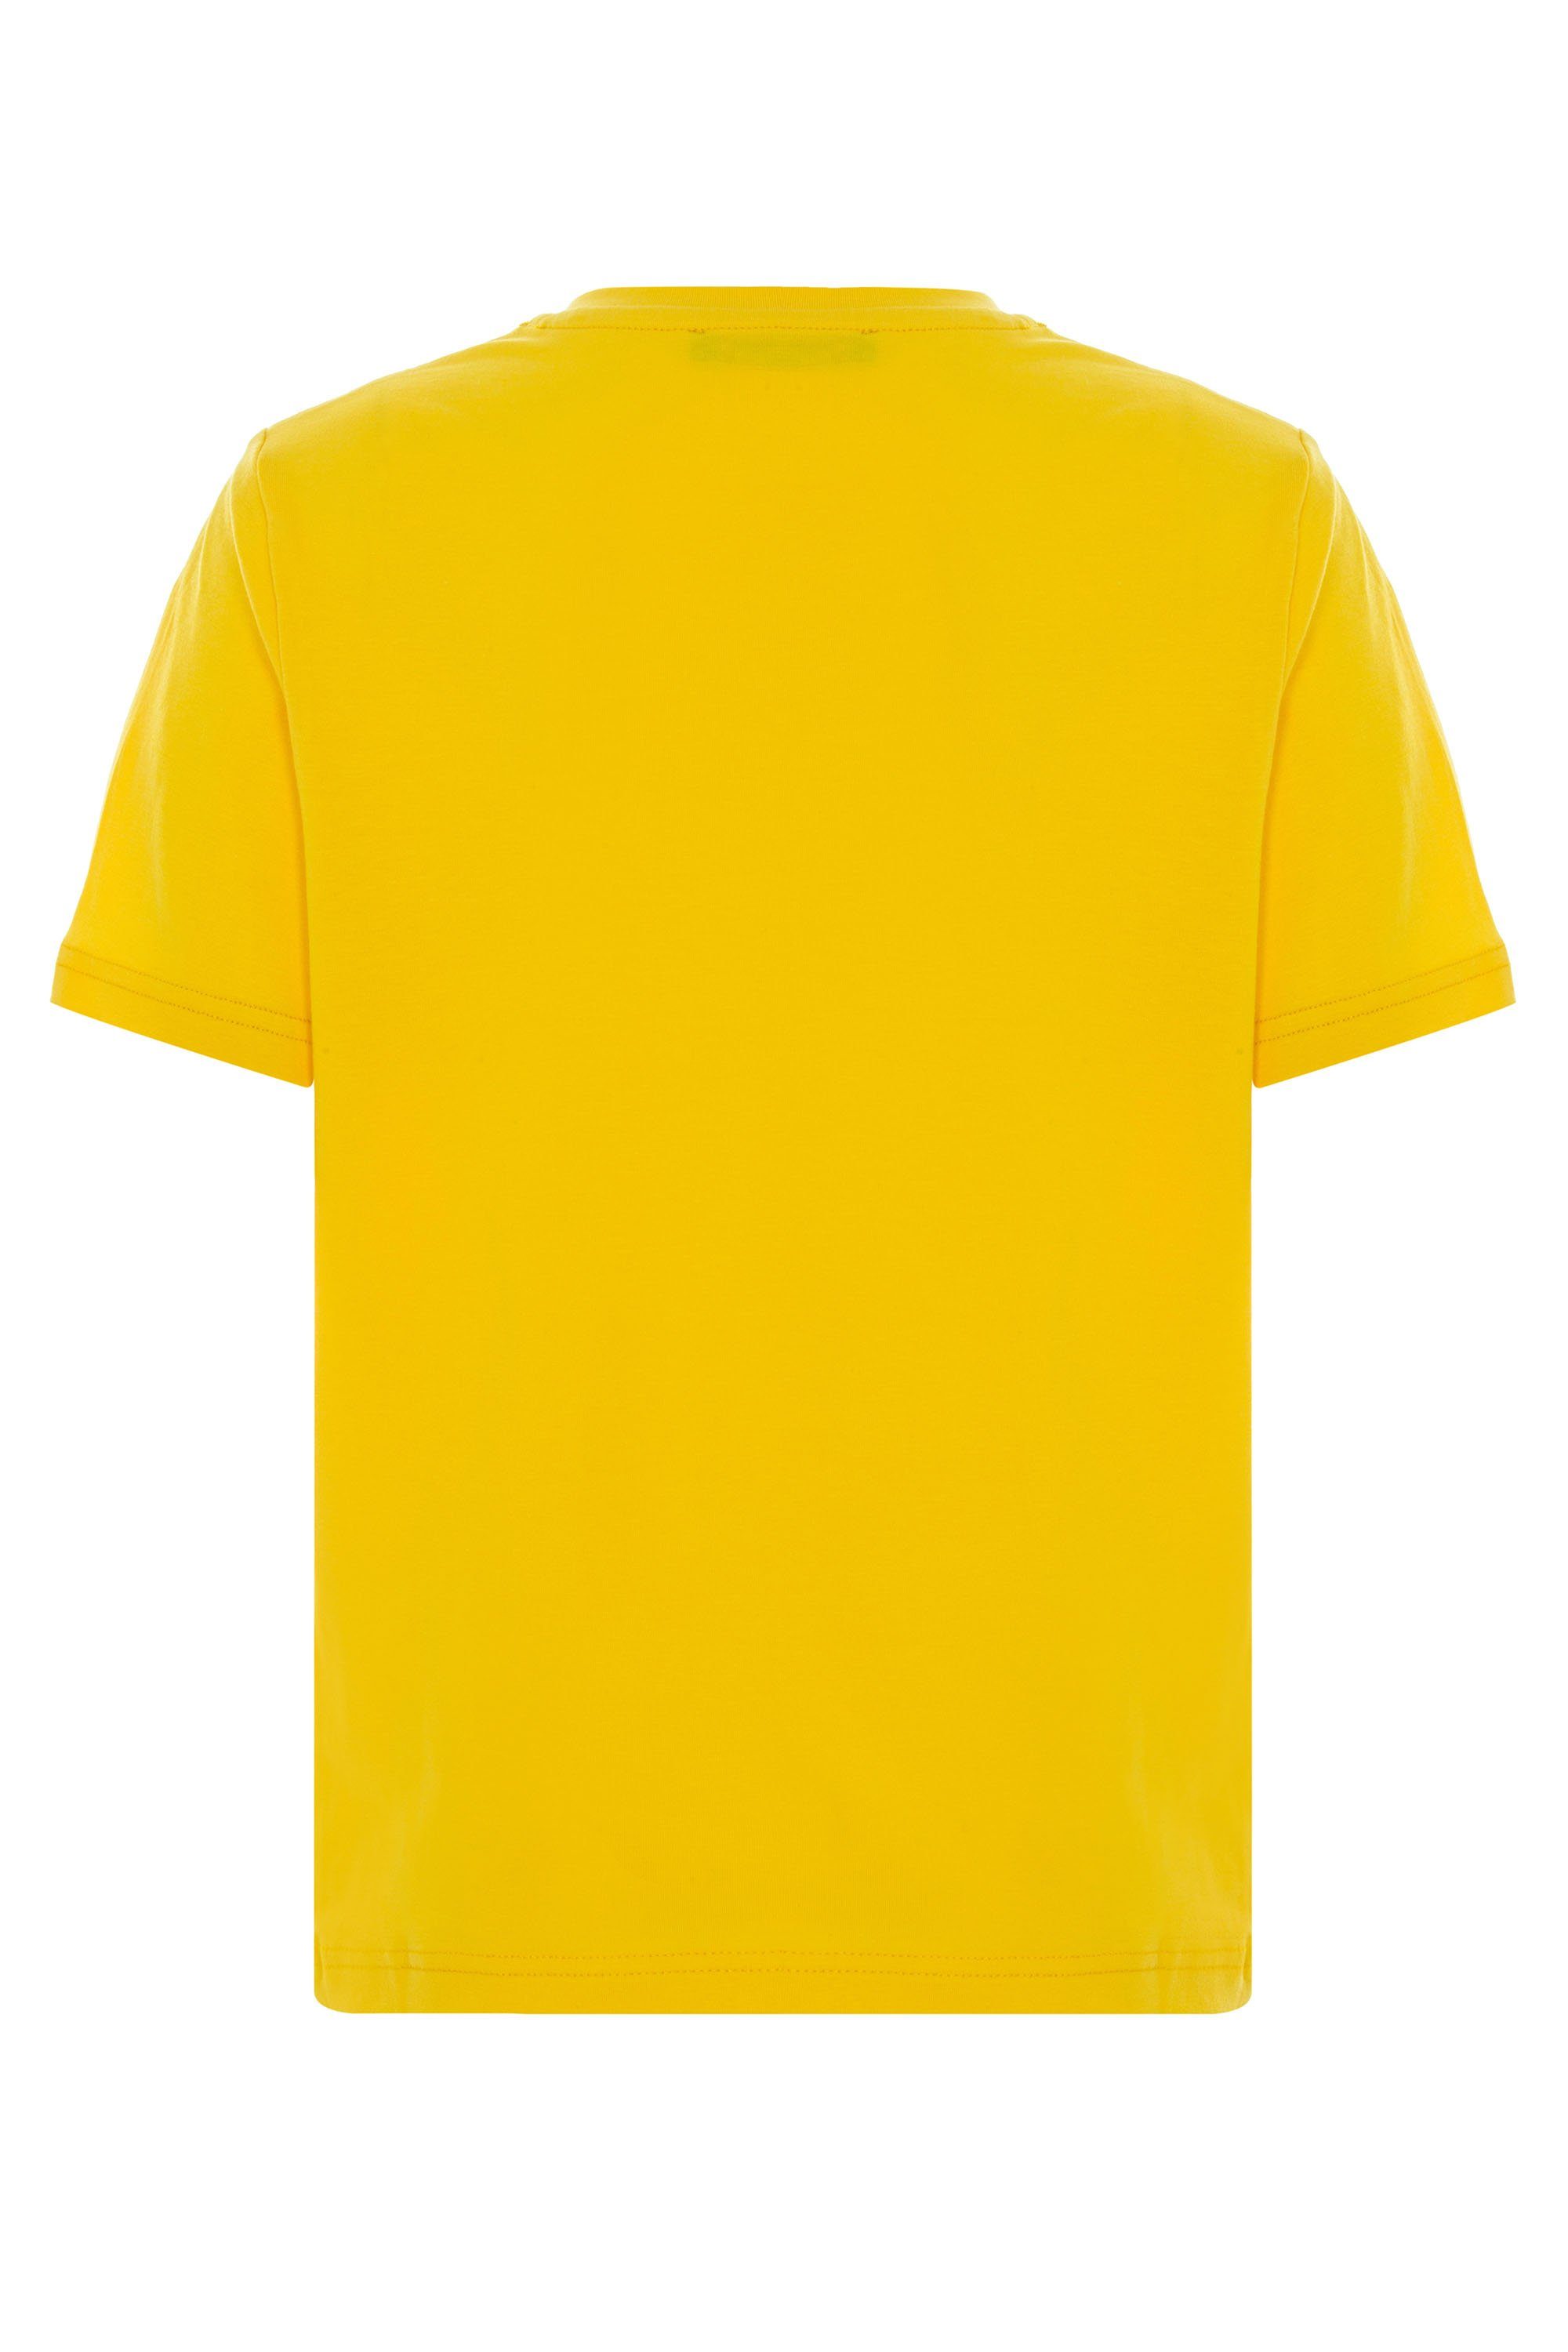 Cipo & Print gelb-schwarz mit coolem Baxx T-Shirt